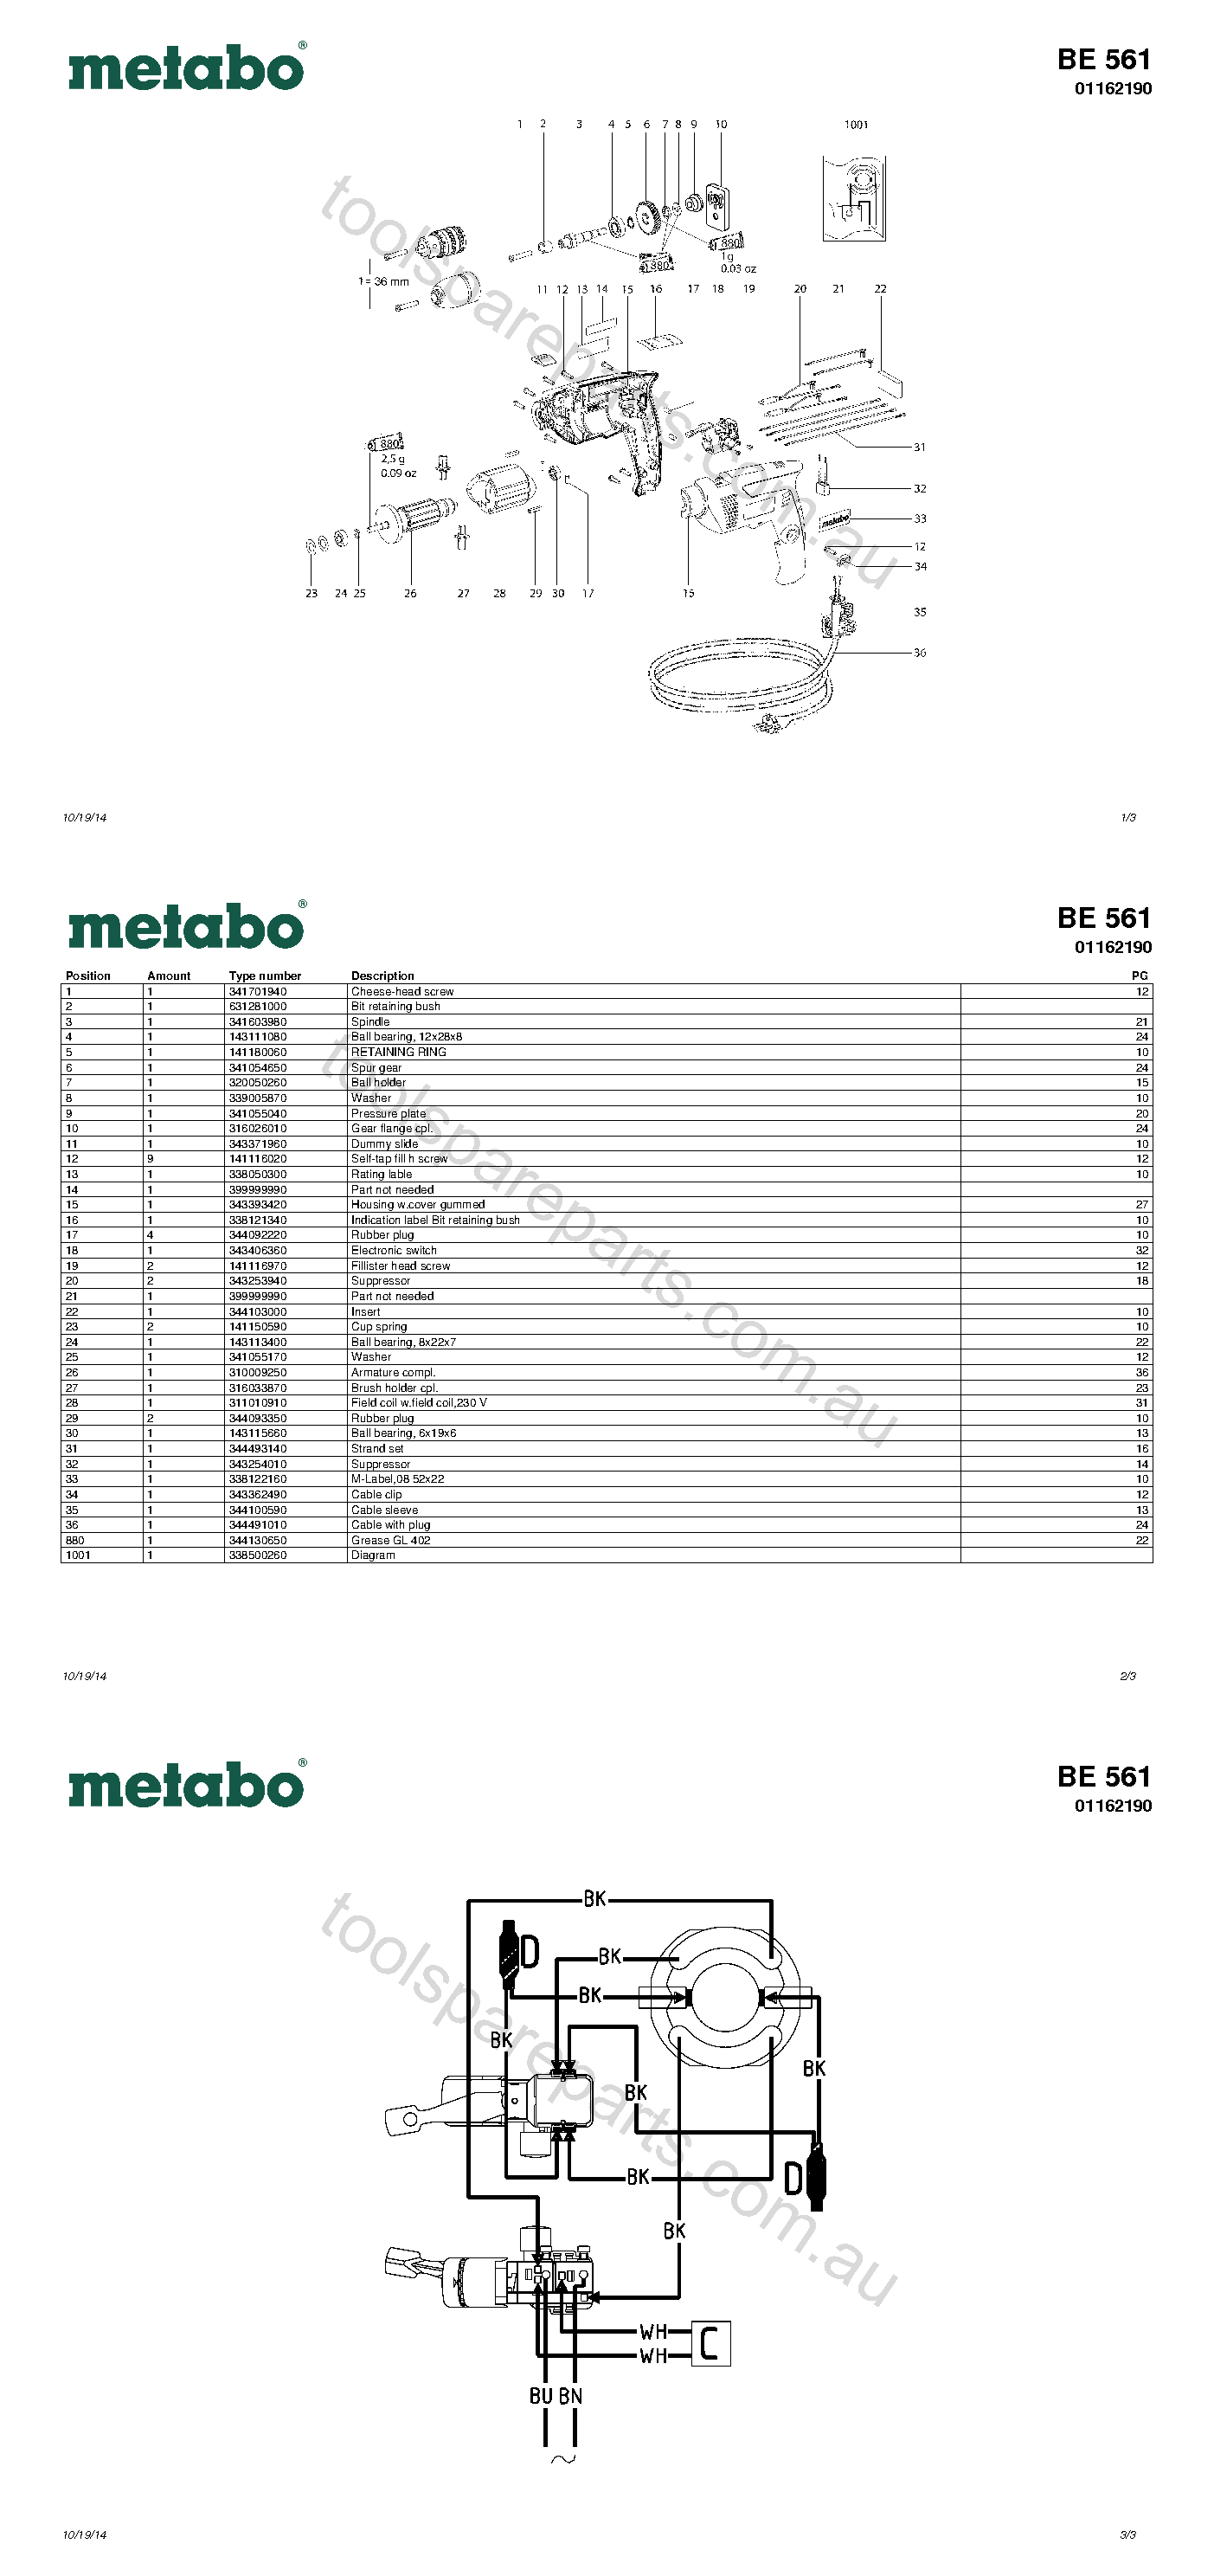 Metabo BE 561 01162190  Diagram 1